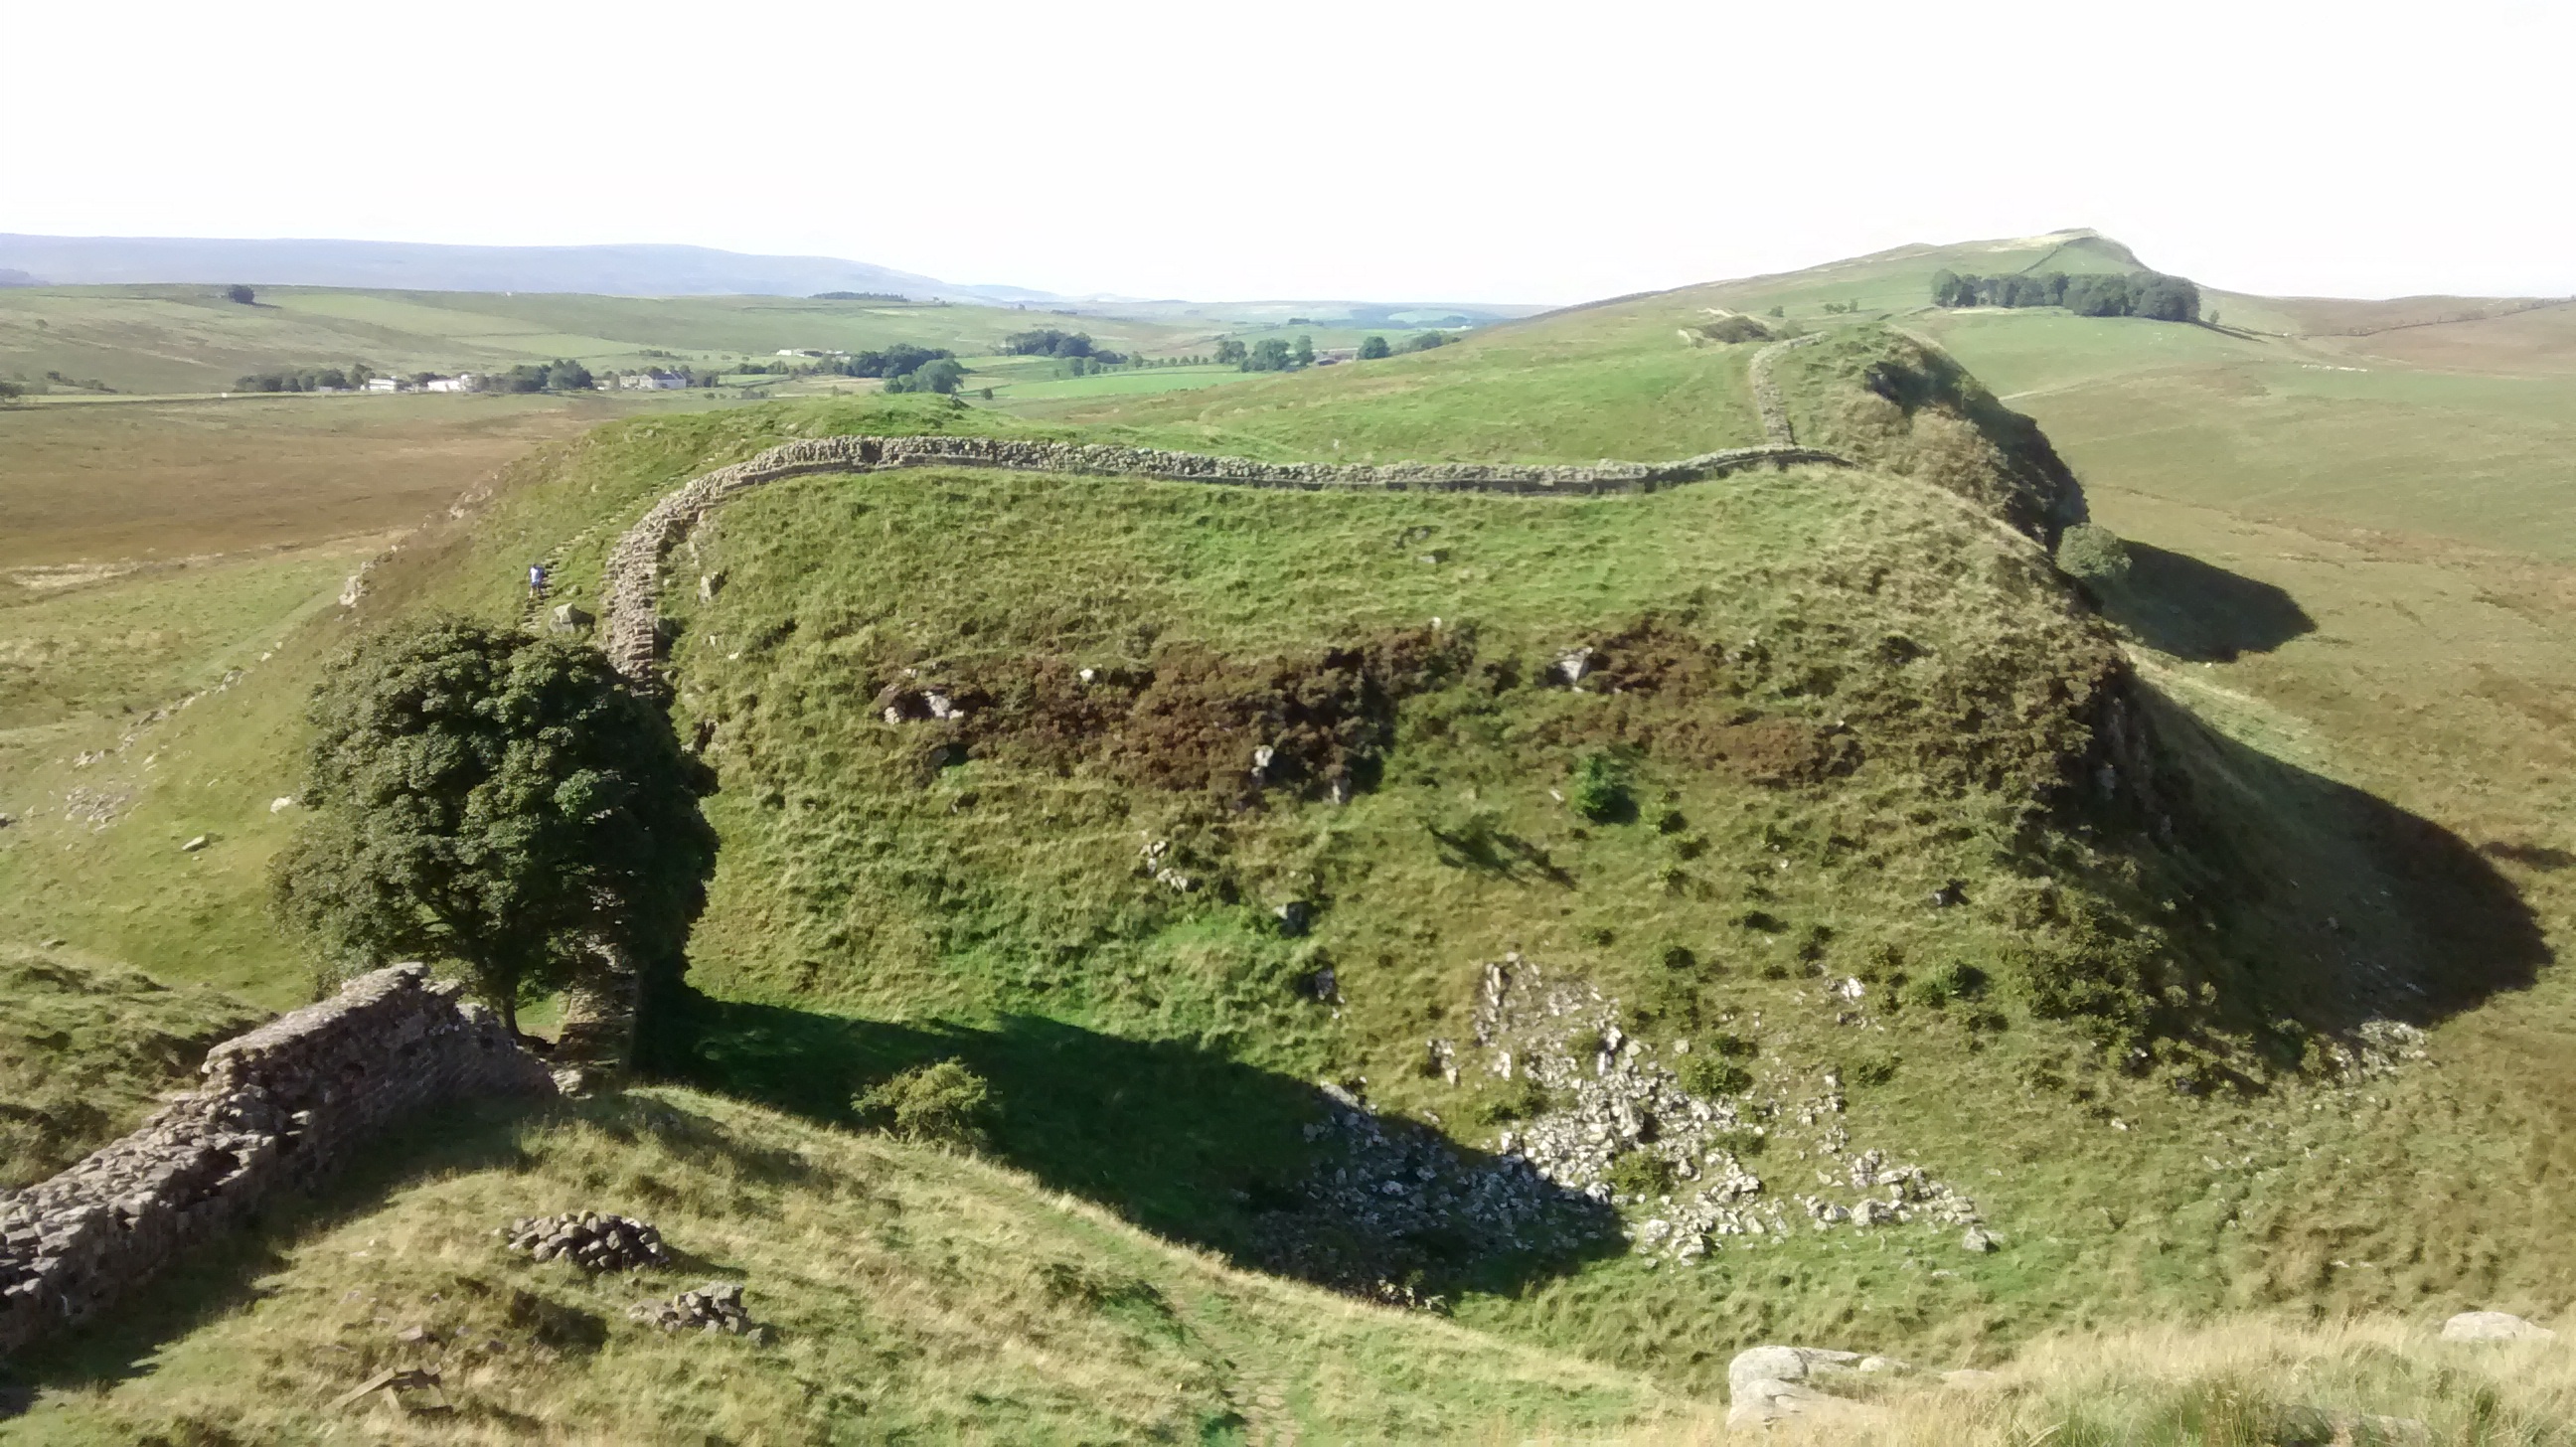 Sycamore Gap on Hadrian's Wall